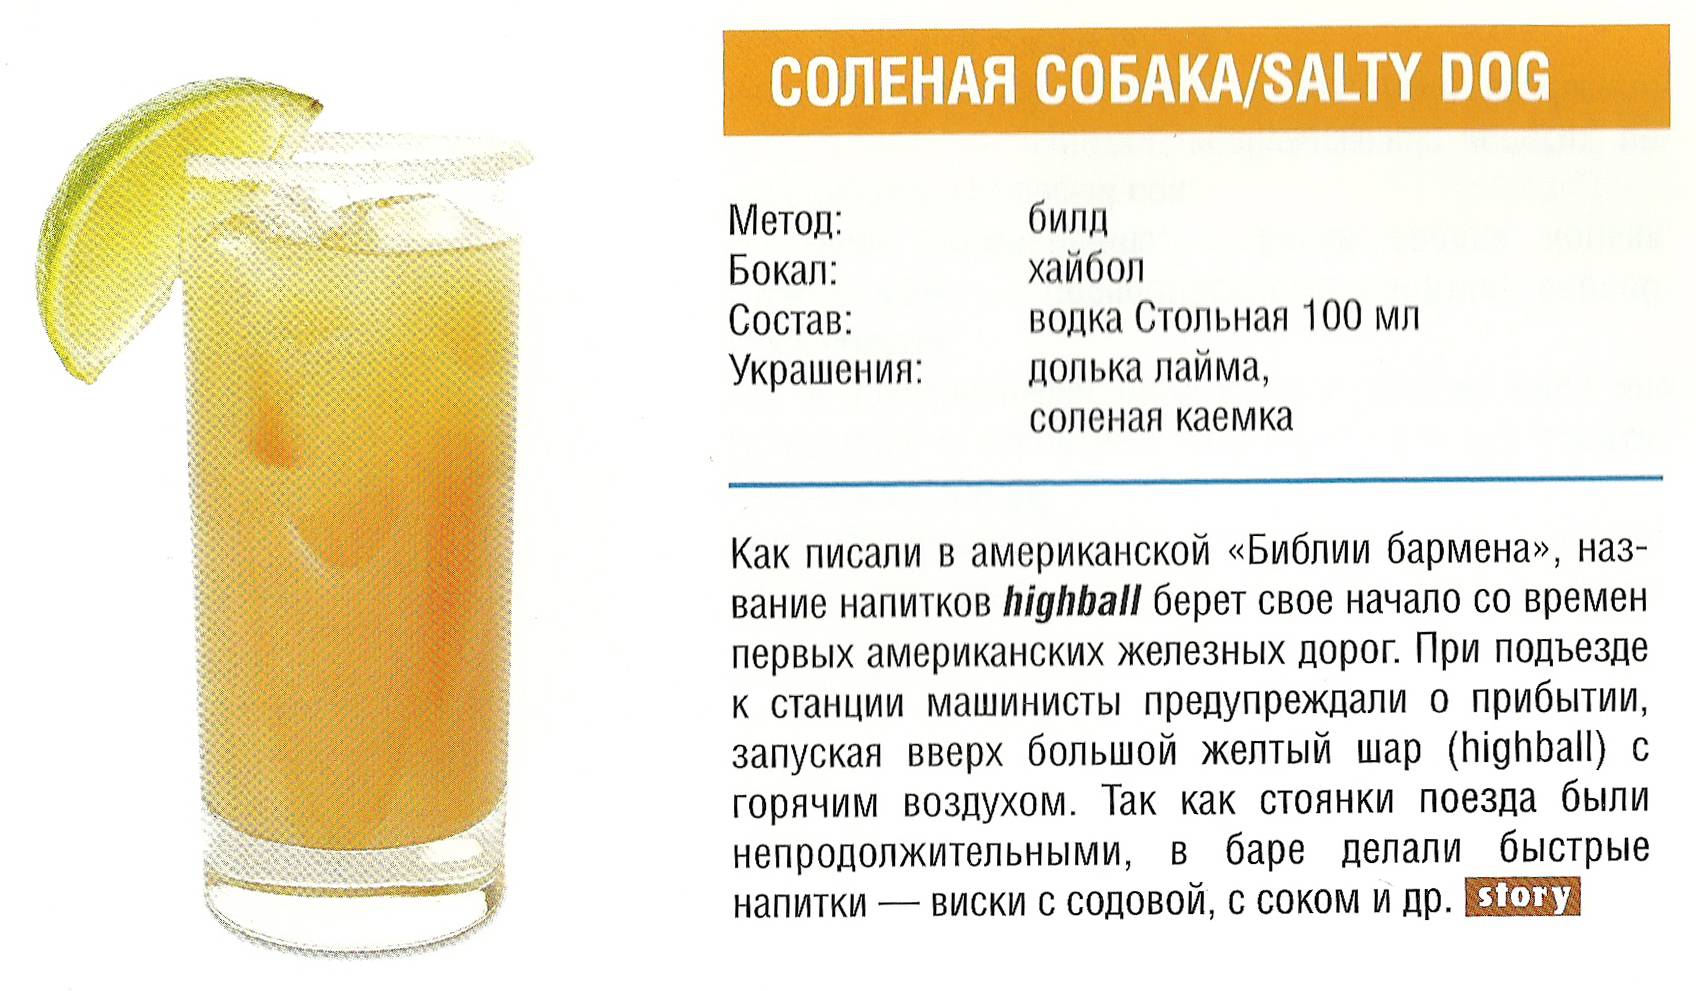 Особый ингредиент коктейля - сперма бармена